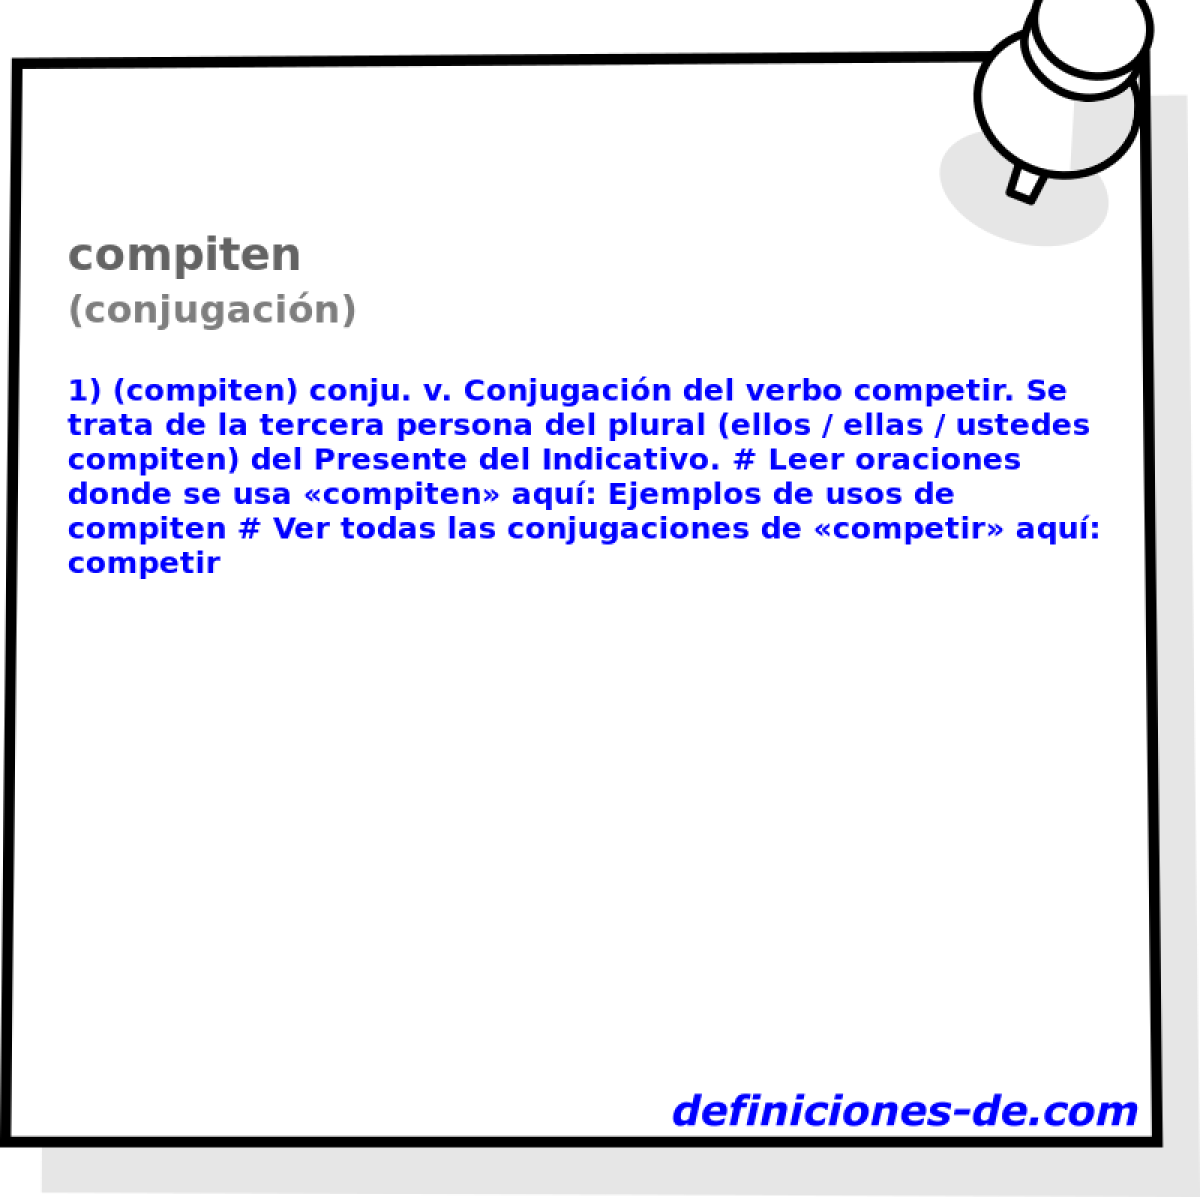 compiten (conjugacin)